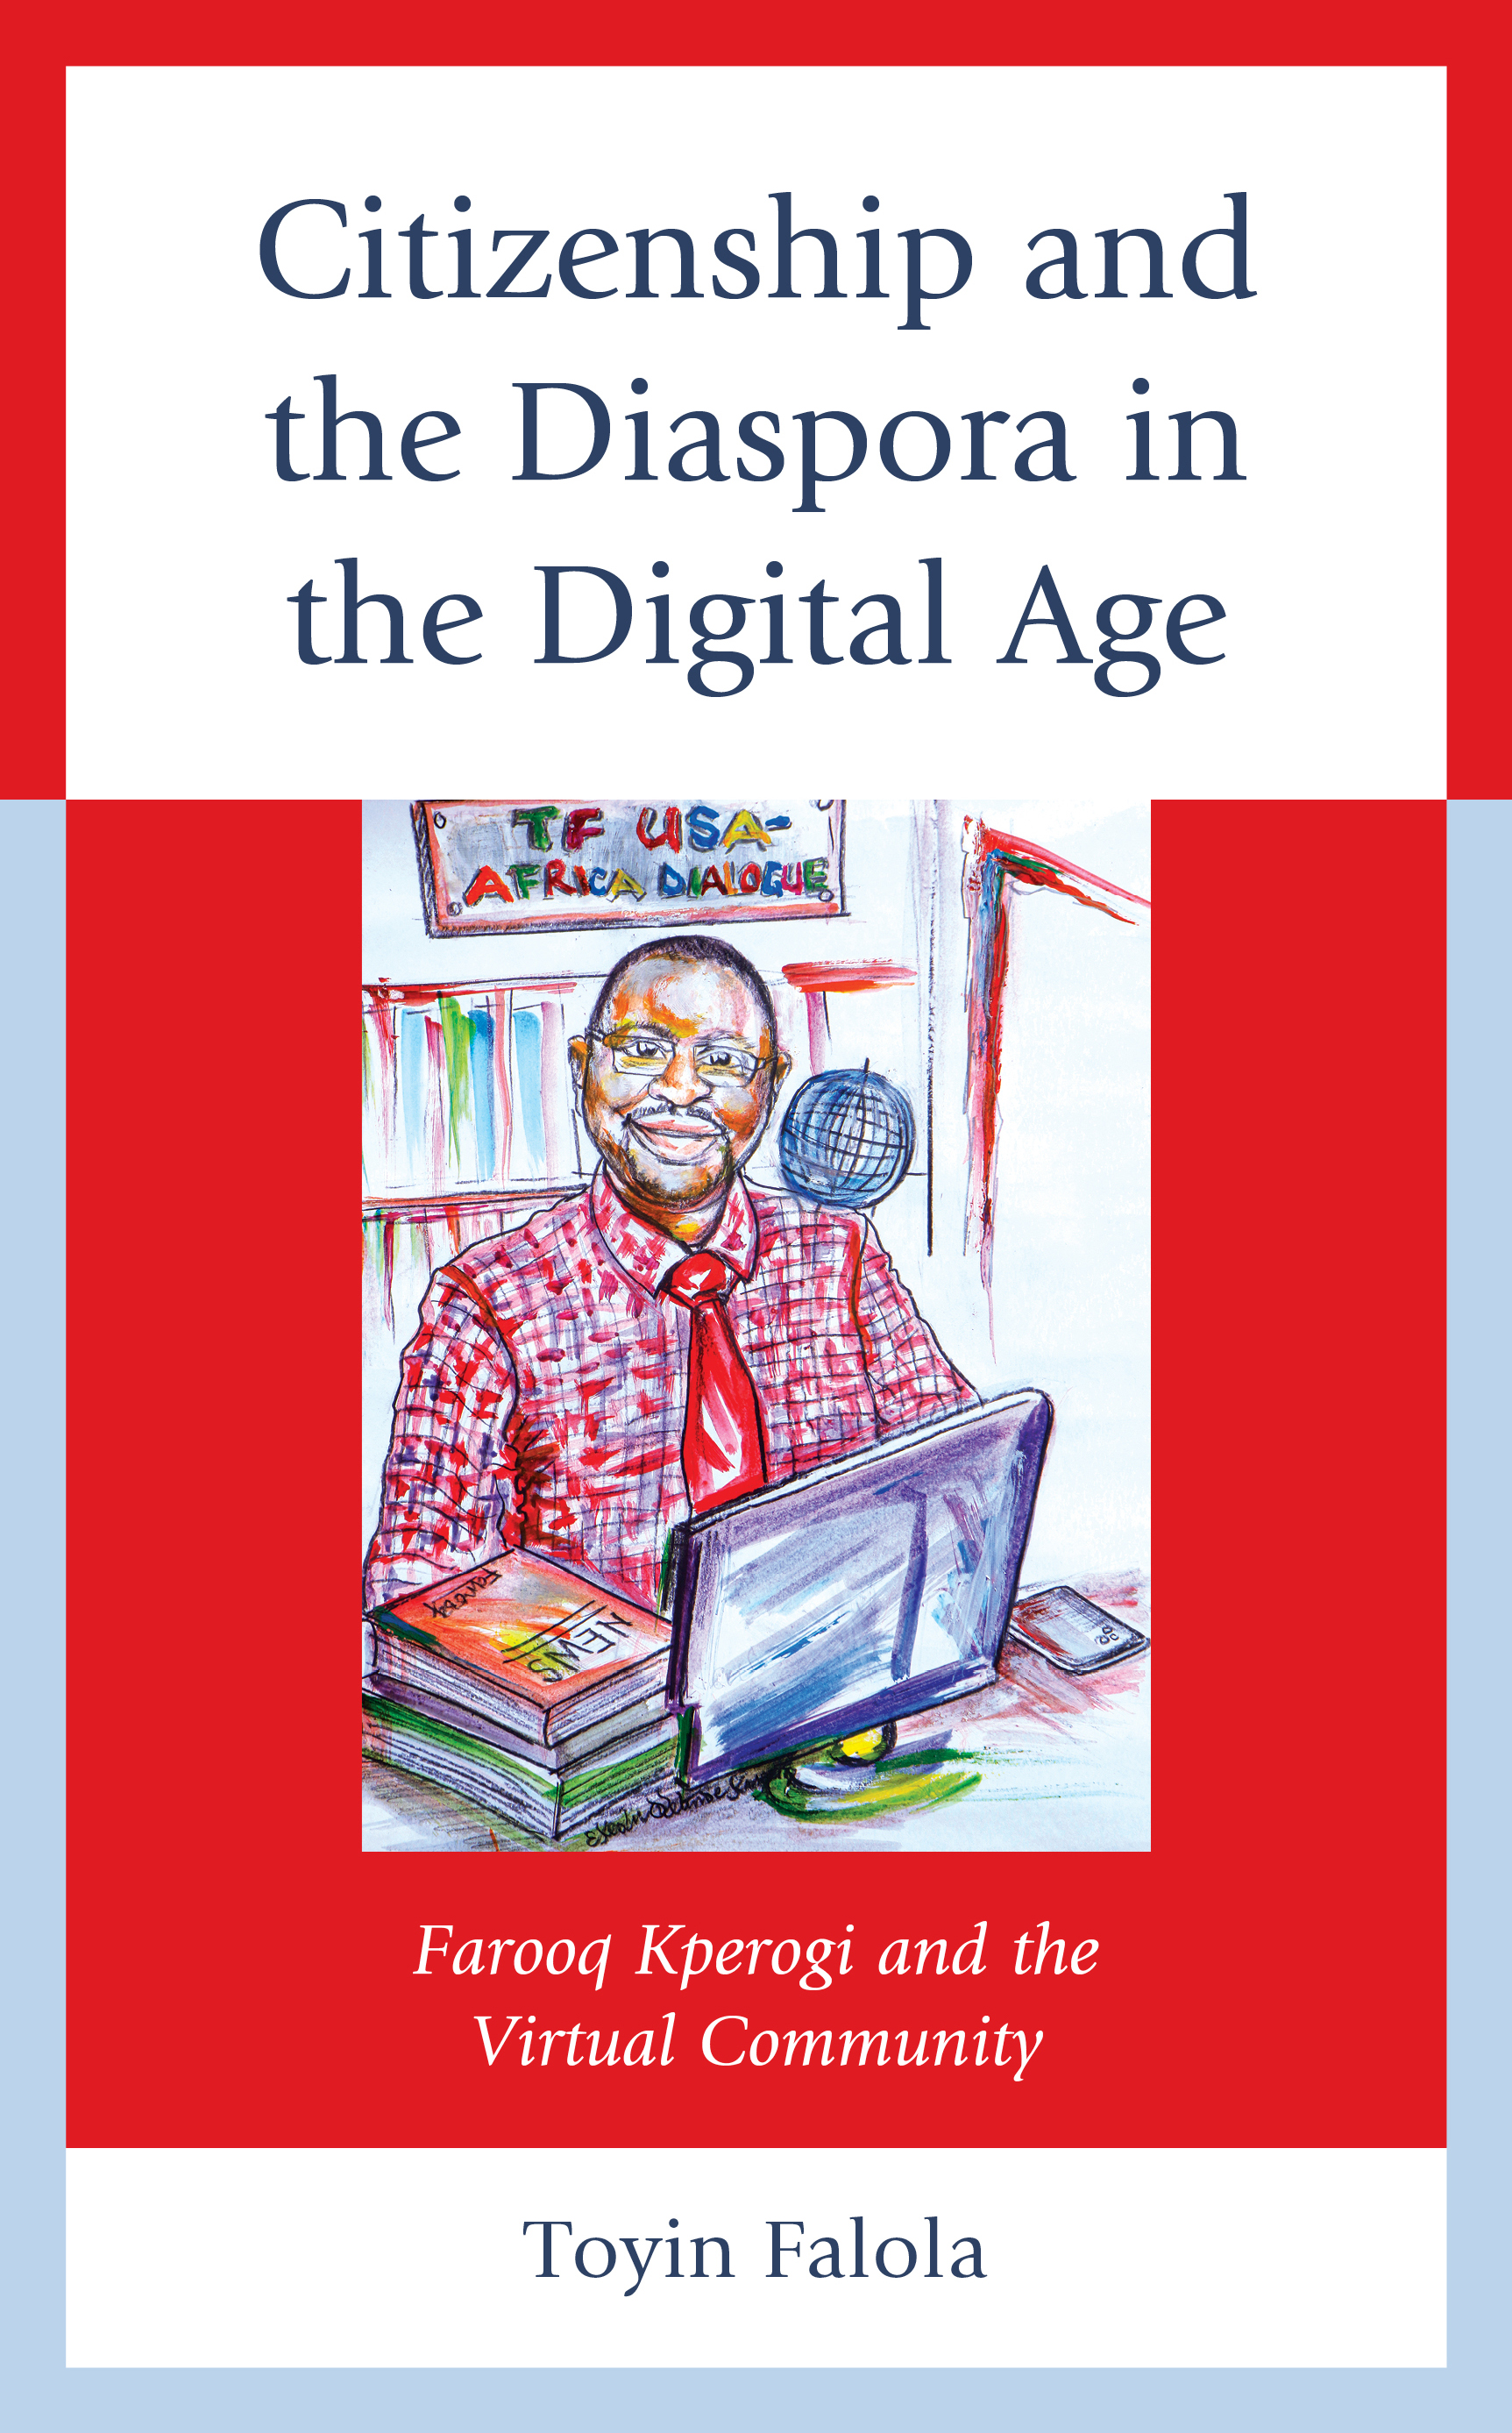 Citizenship and the Diaspora in the Digital Age: Farooq Kperogi and the Virtual Community